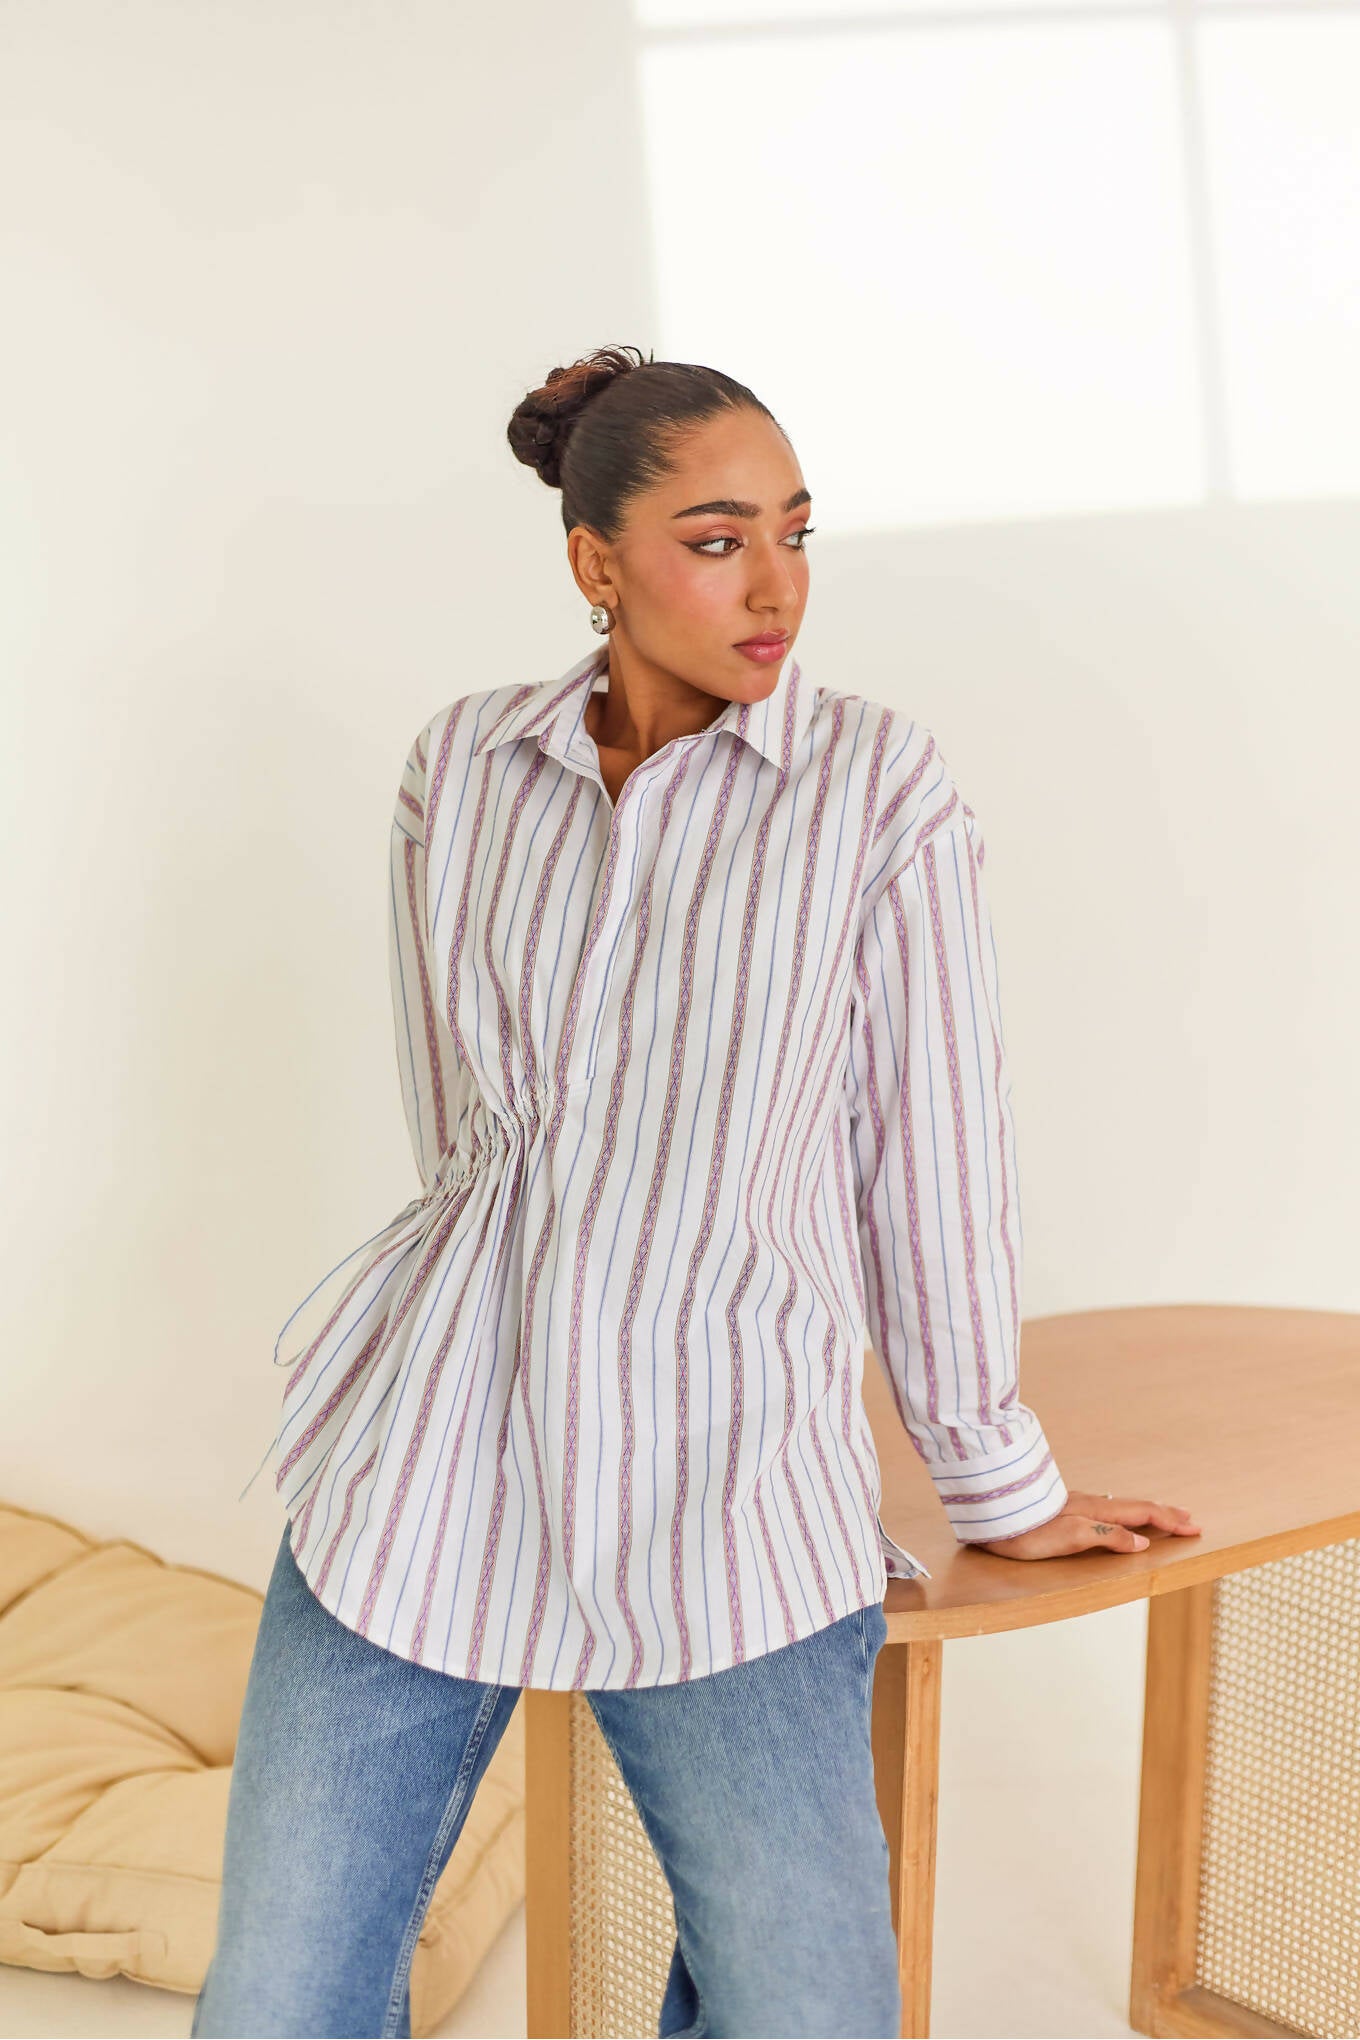 Pin Striped Shirt